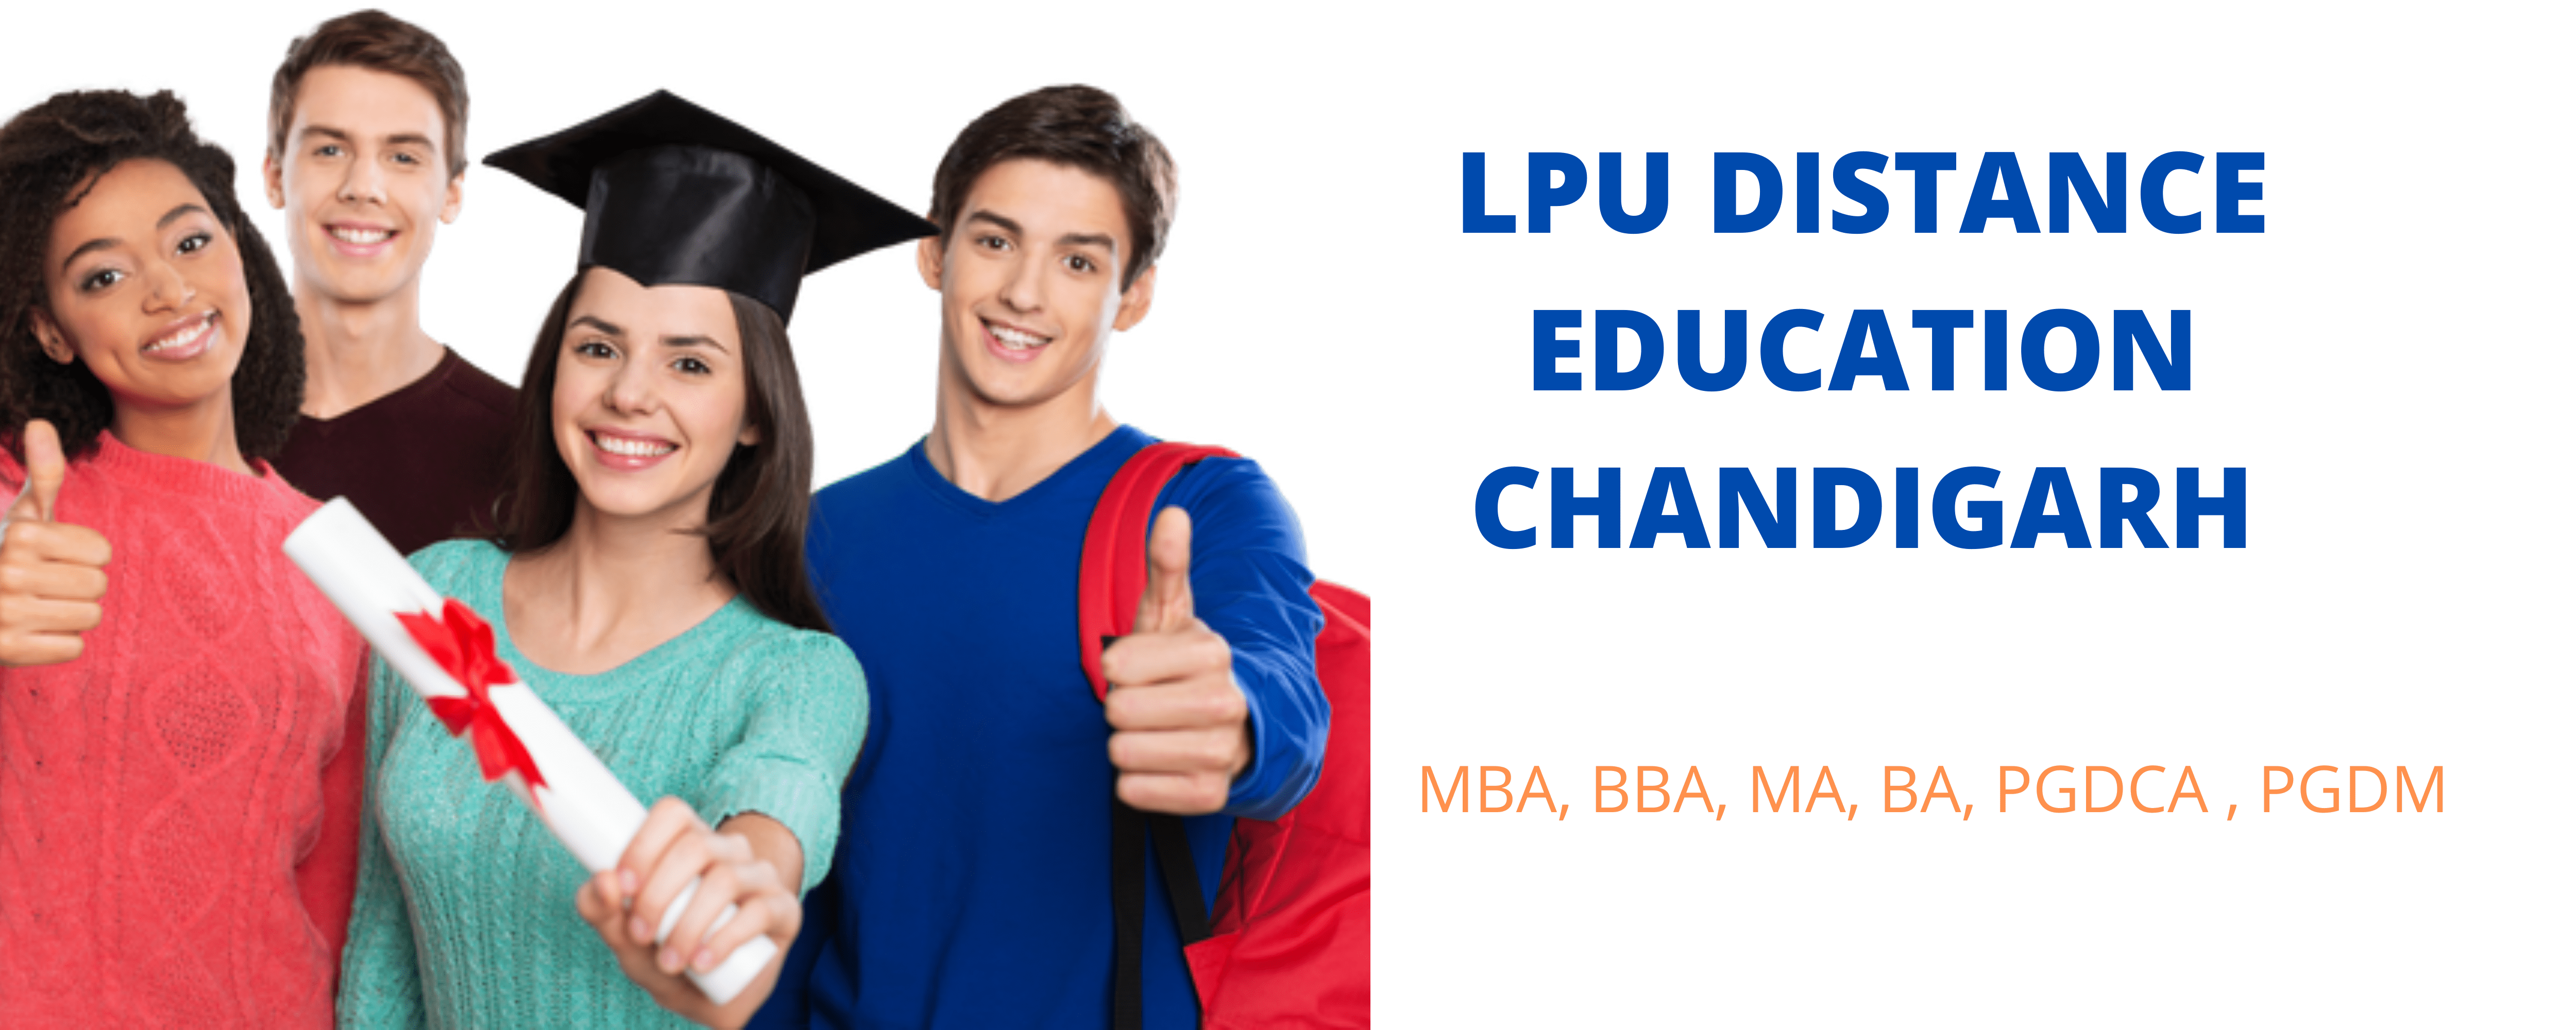 LPU Distance Education Chandigarh